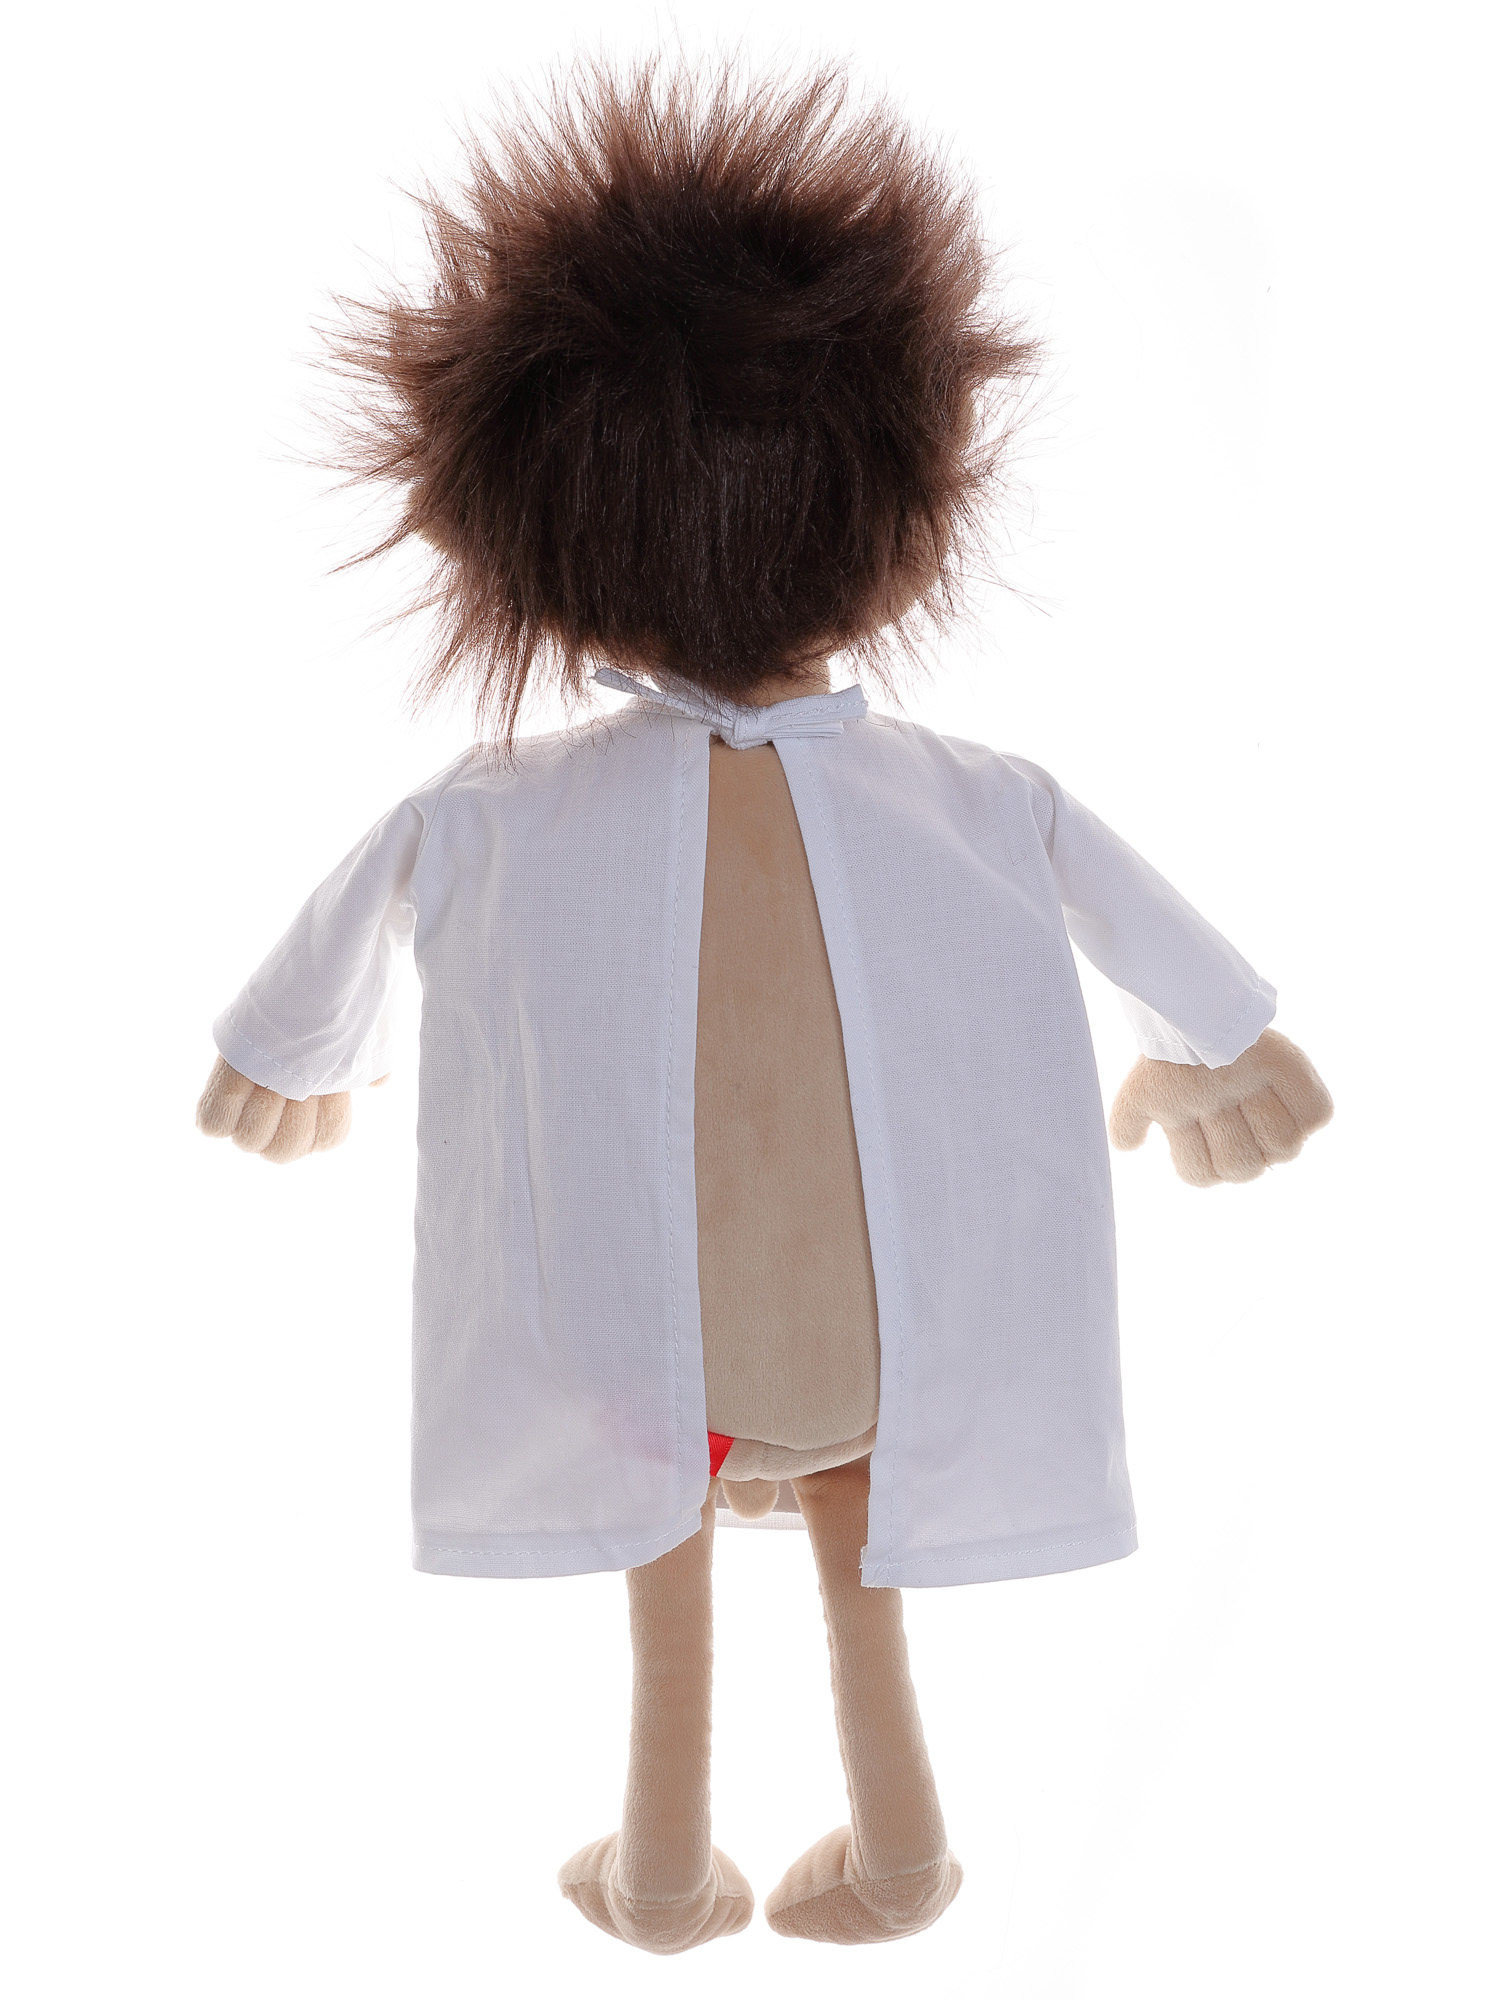 Plush doll Erwin, the little patient